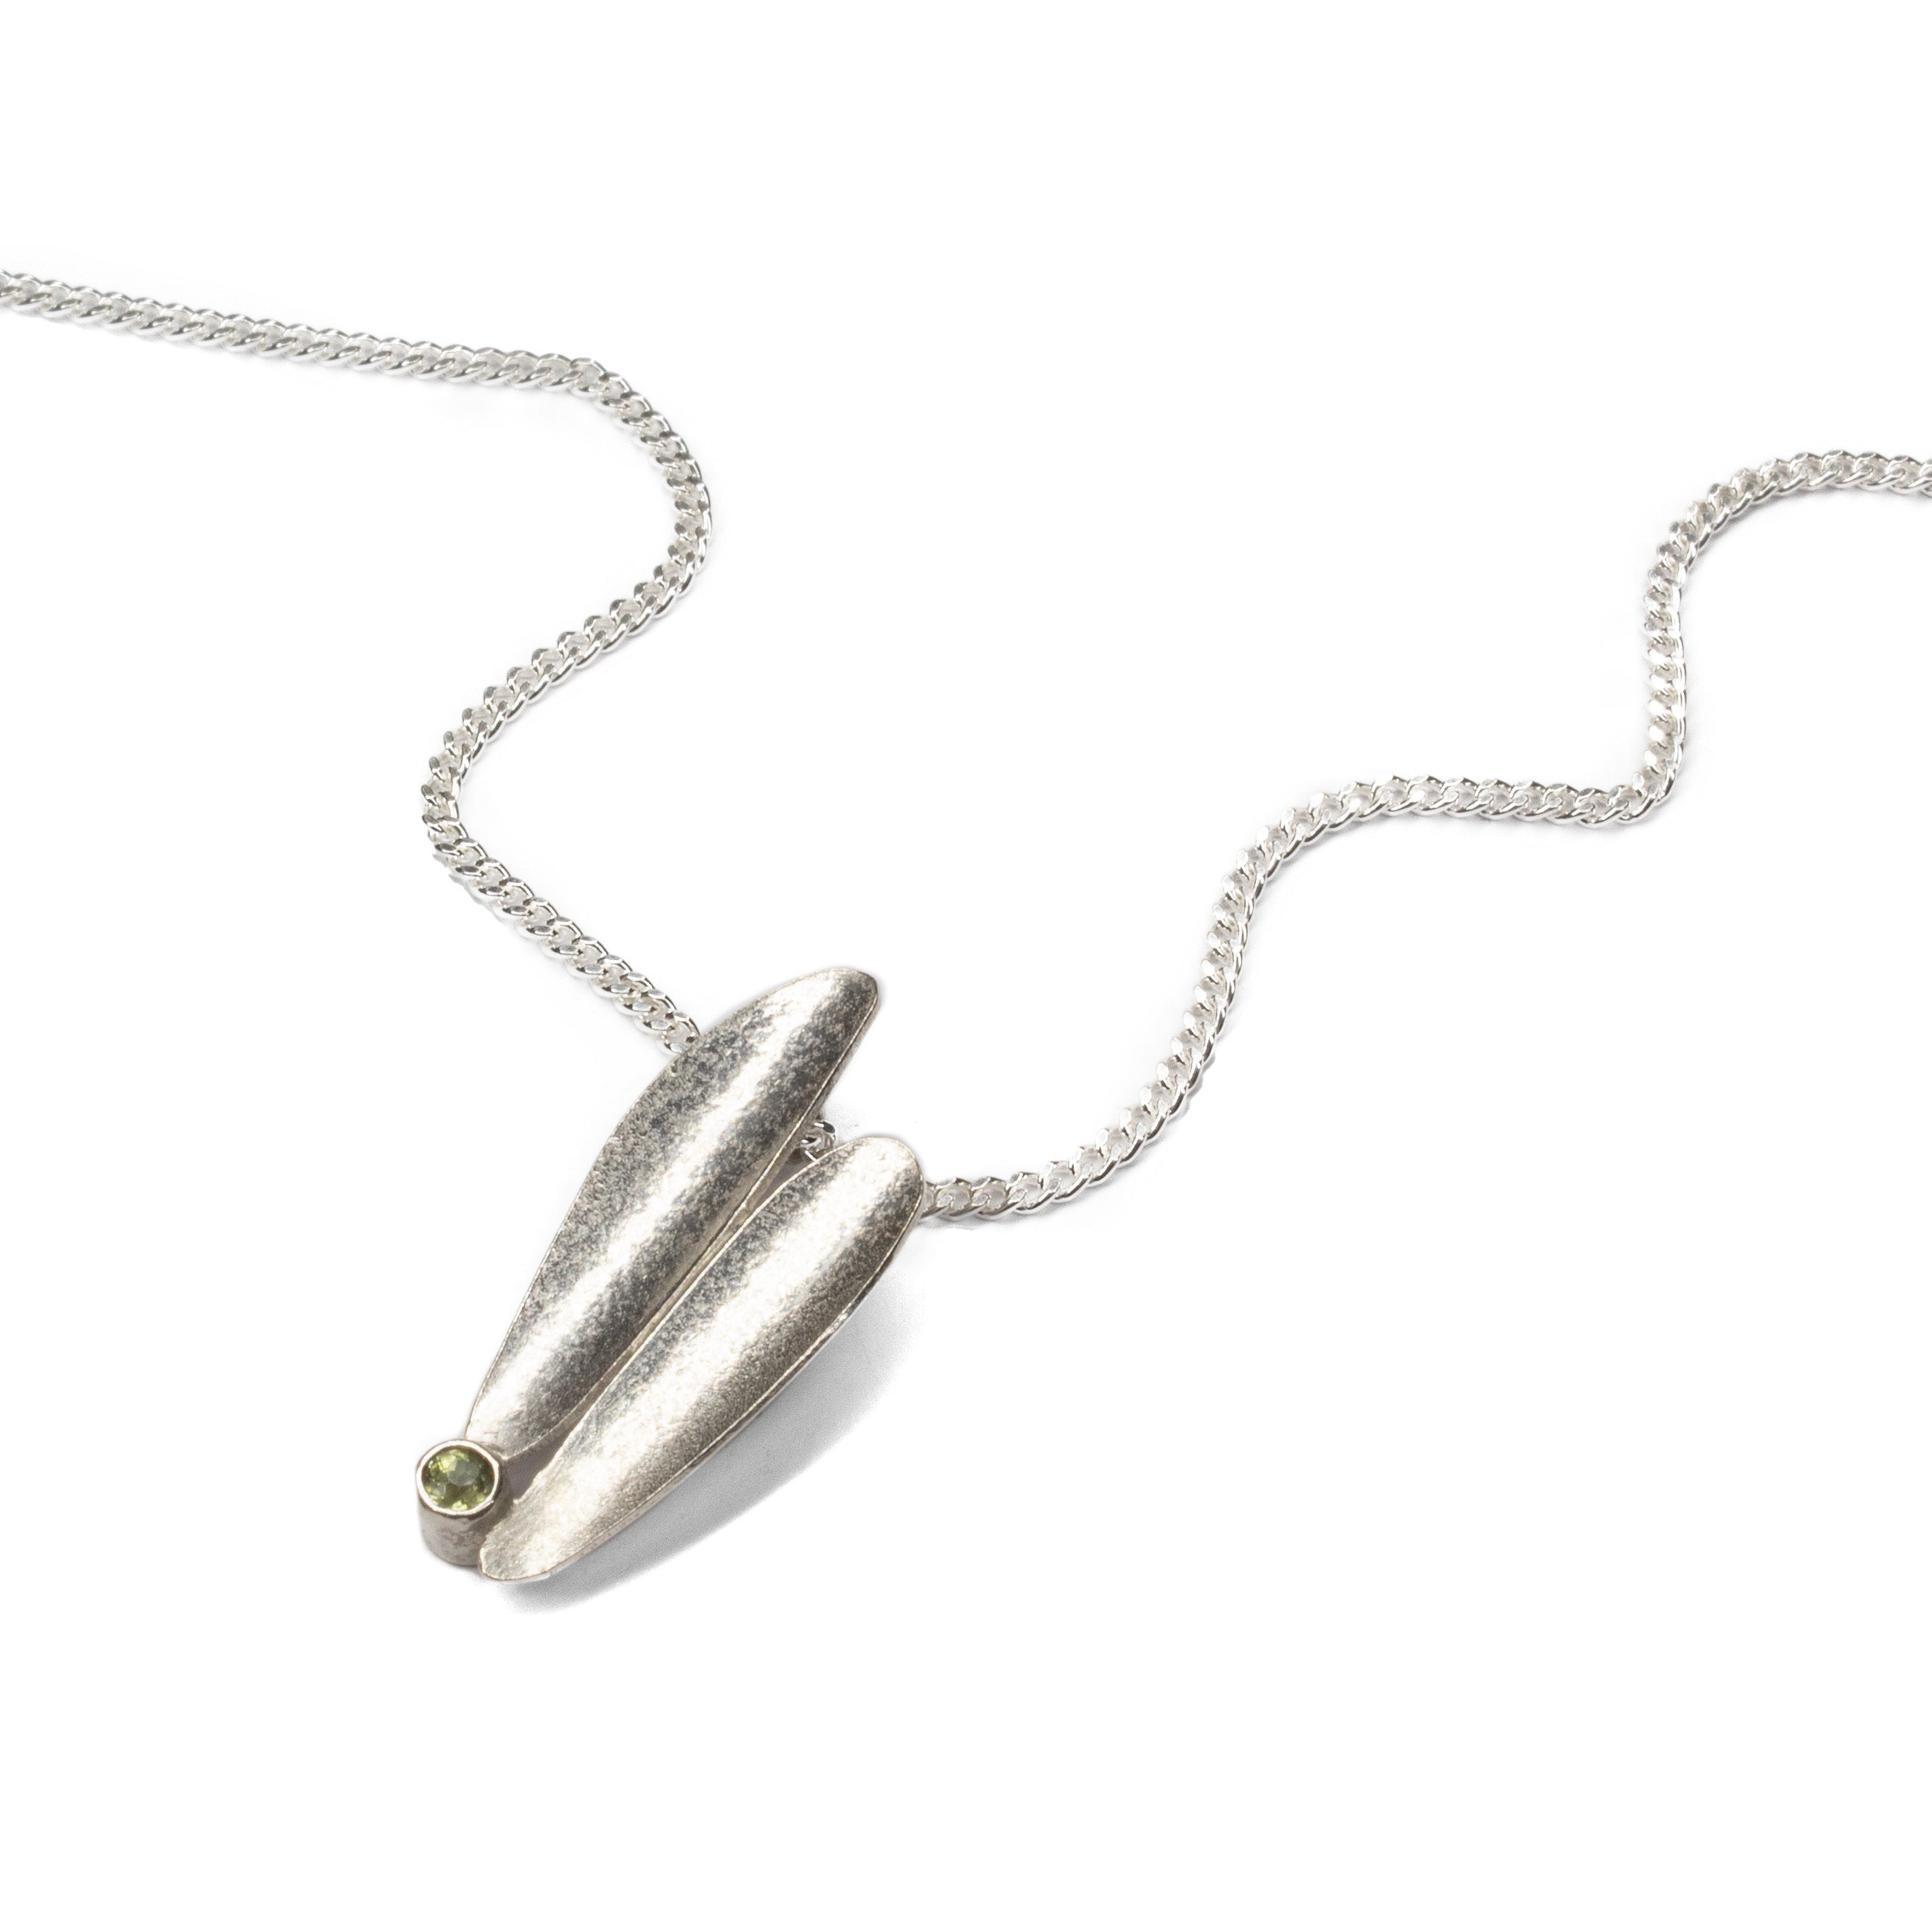 Lustre silver and peridot pendant